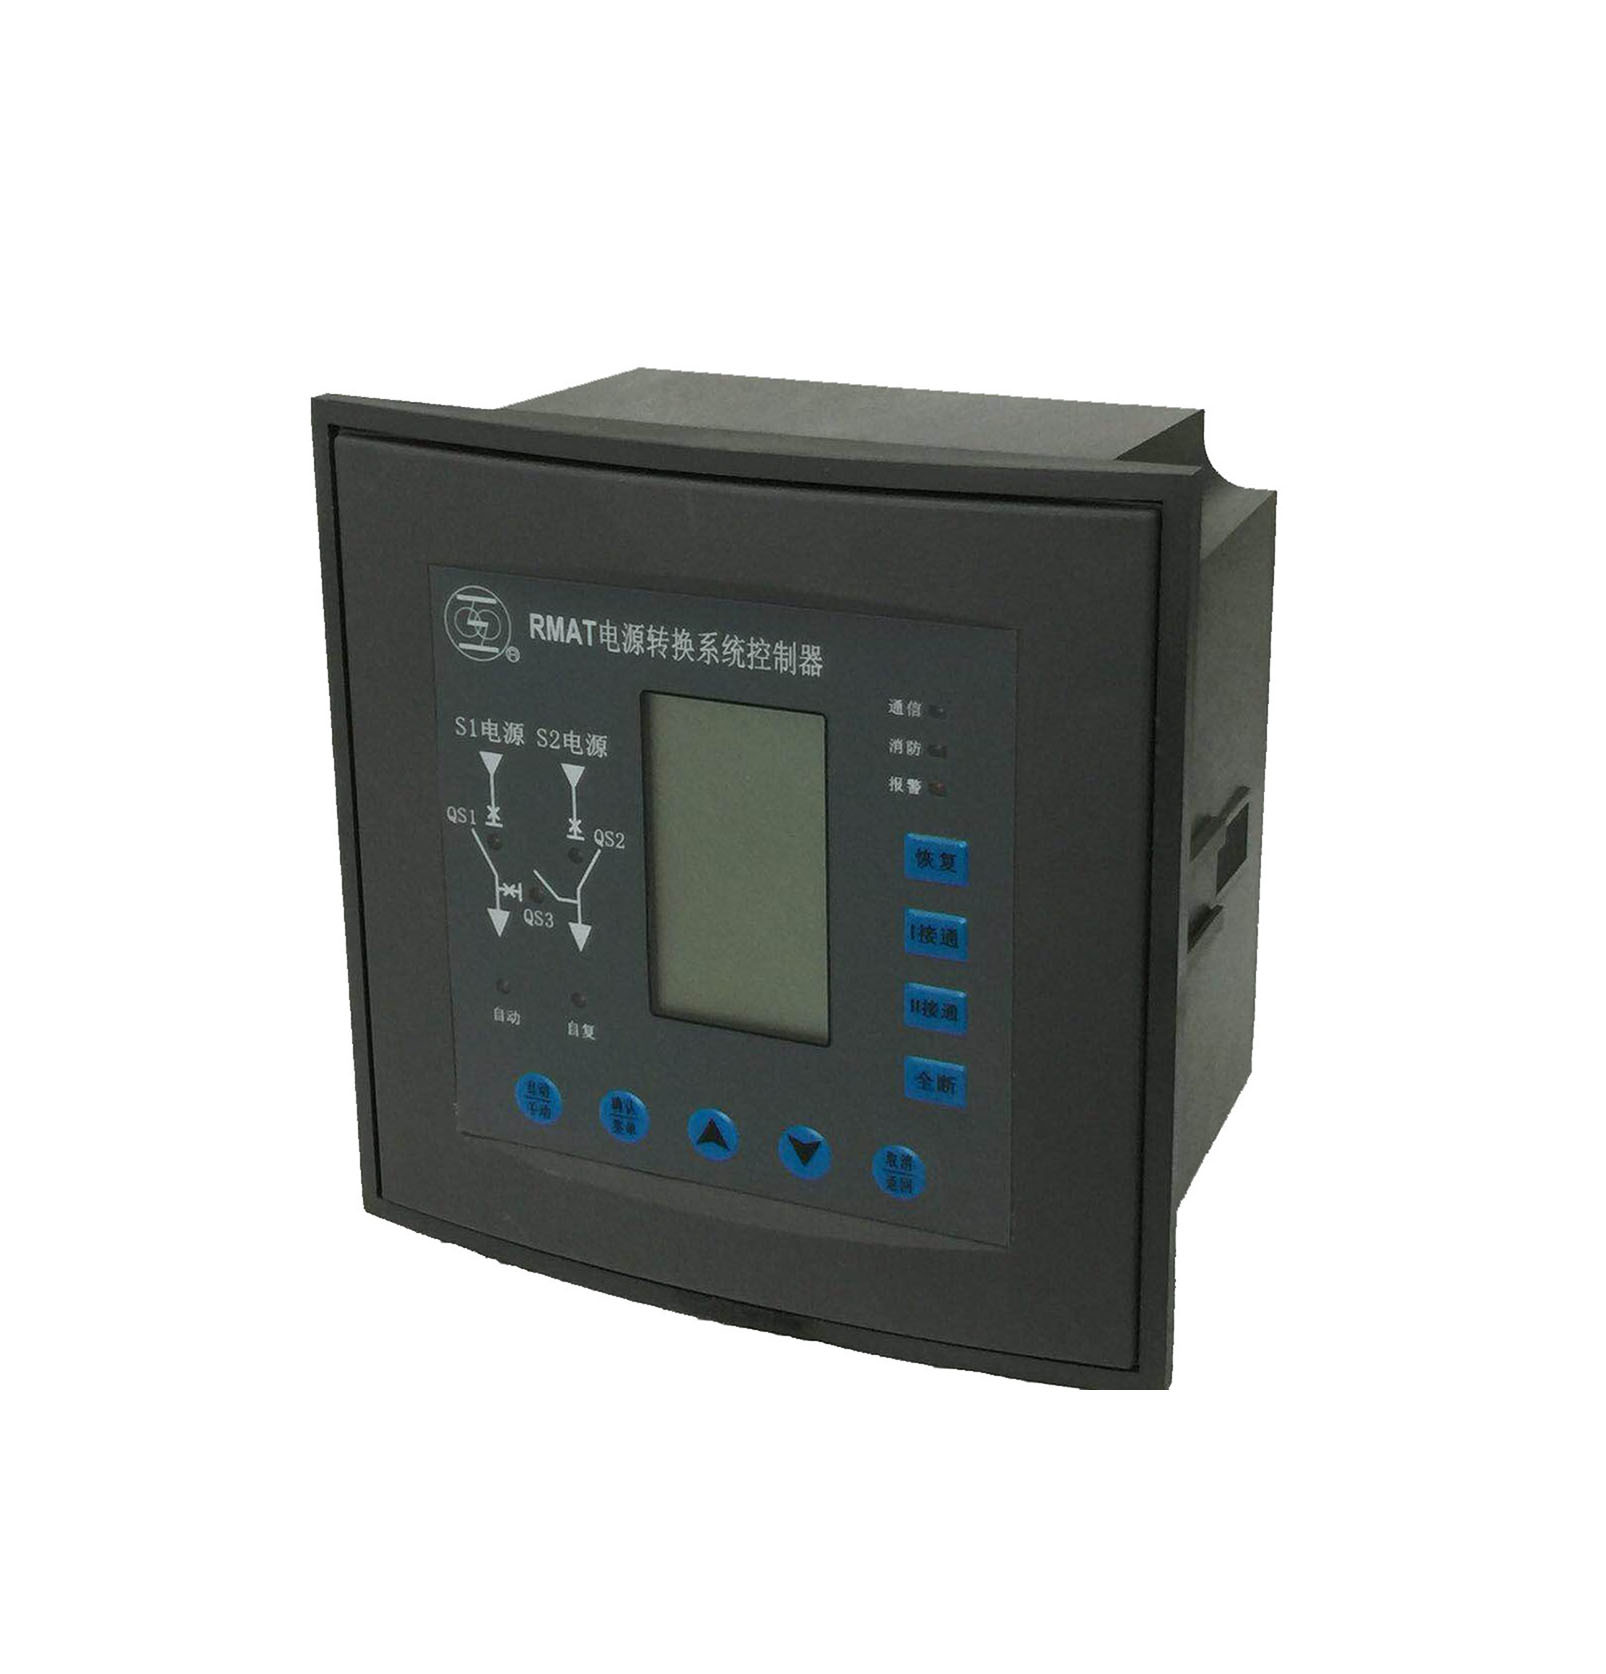 RMAT电源自动转换系统控制器